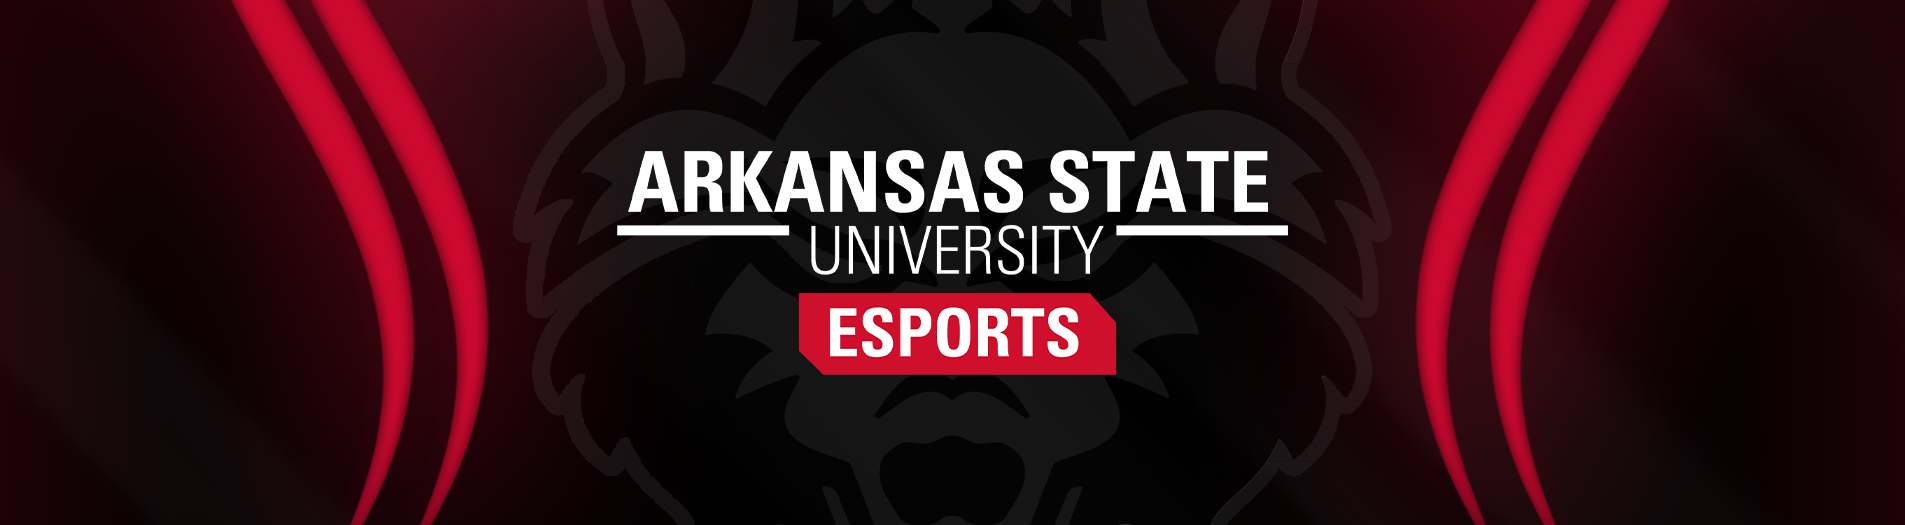 Arkansas State University eSports